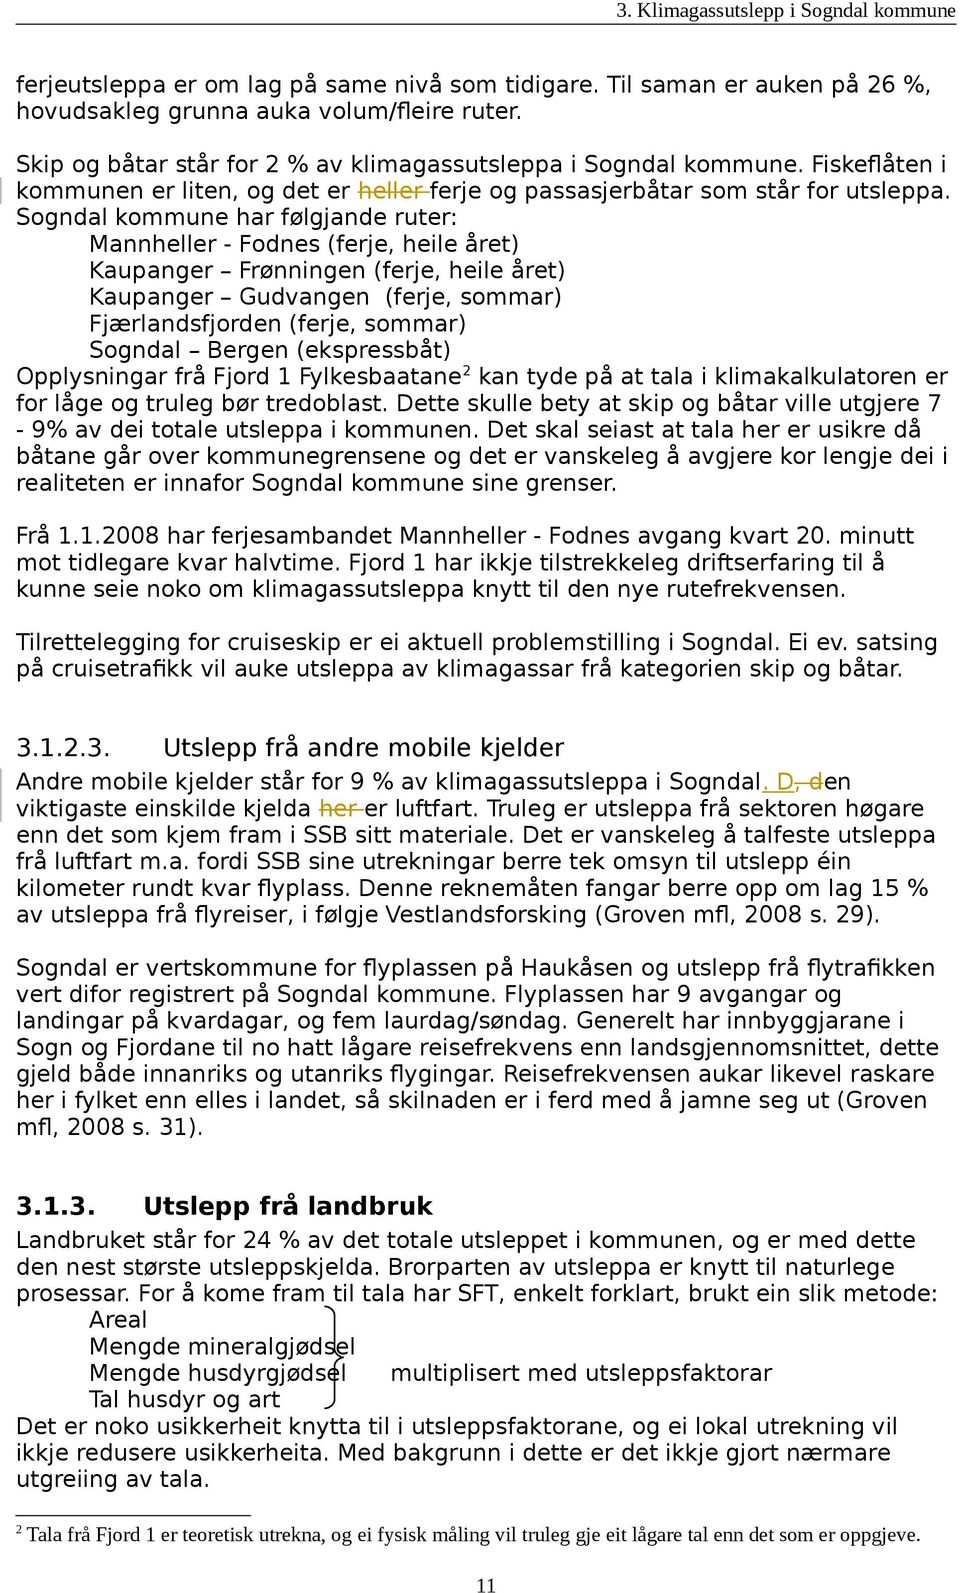 Sogndal kommune har følgjande ruter: Mannheller - Fodnes (ferje, heile året) Kaupanger Frønningen (ferje, heile året) Kaupanger Gudvangen (ferje, sommar) Fjærlandsfjorden (ferje, sommar) Sogndal